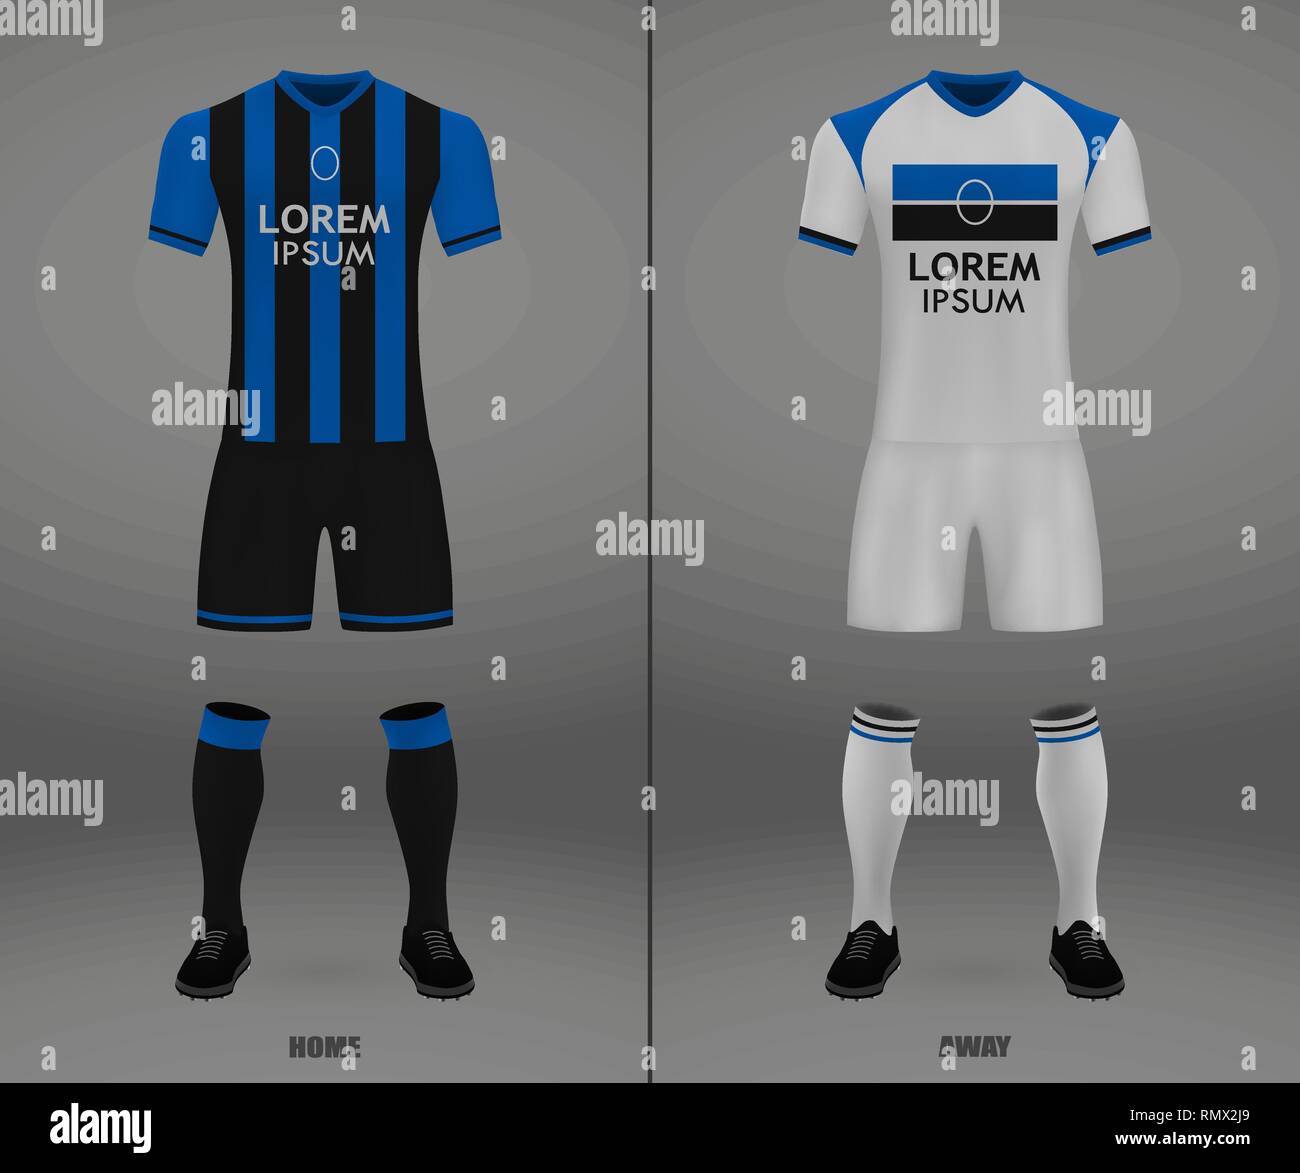 football kit Atalanta Bergamo 2018-19, shirt template for soccer jersey.  Vector illustration Stock Vector Image & Art - Alamy